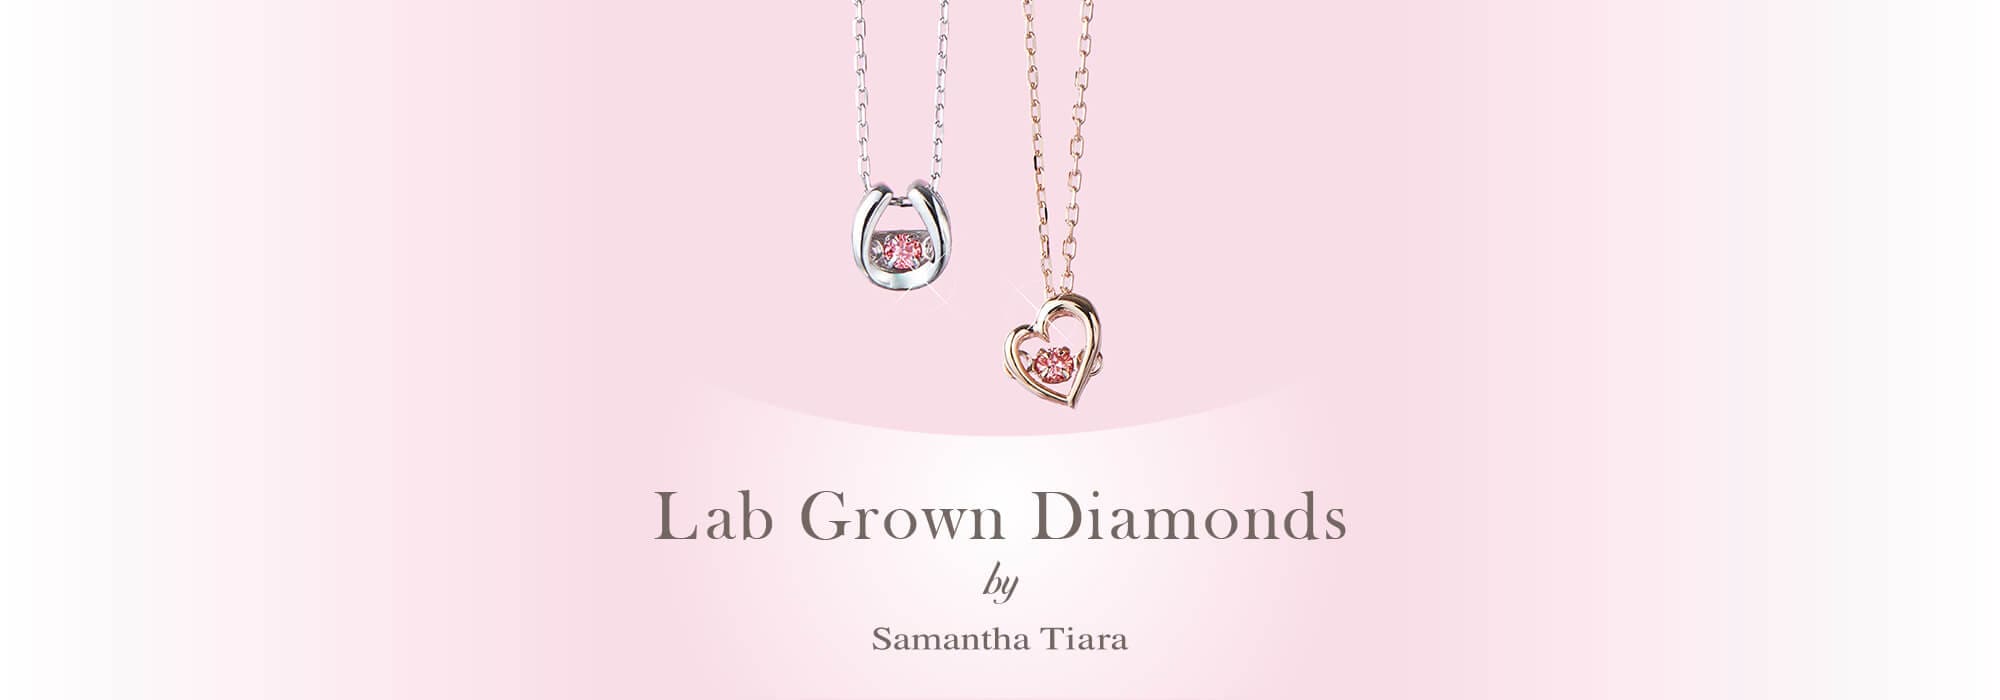 Lab Grown Diamonds by Samantha Tiara